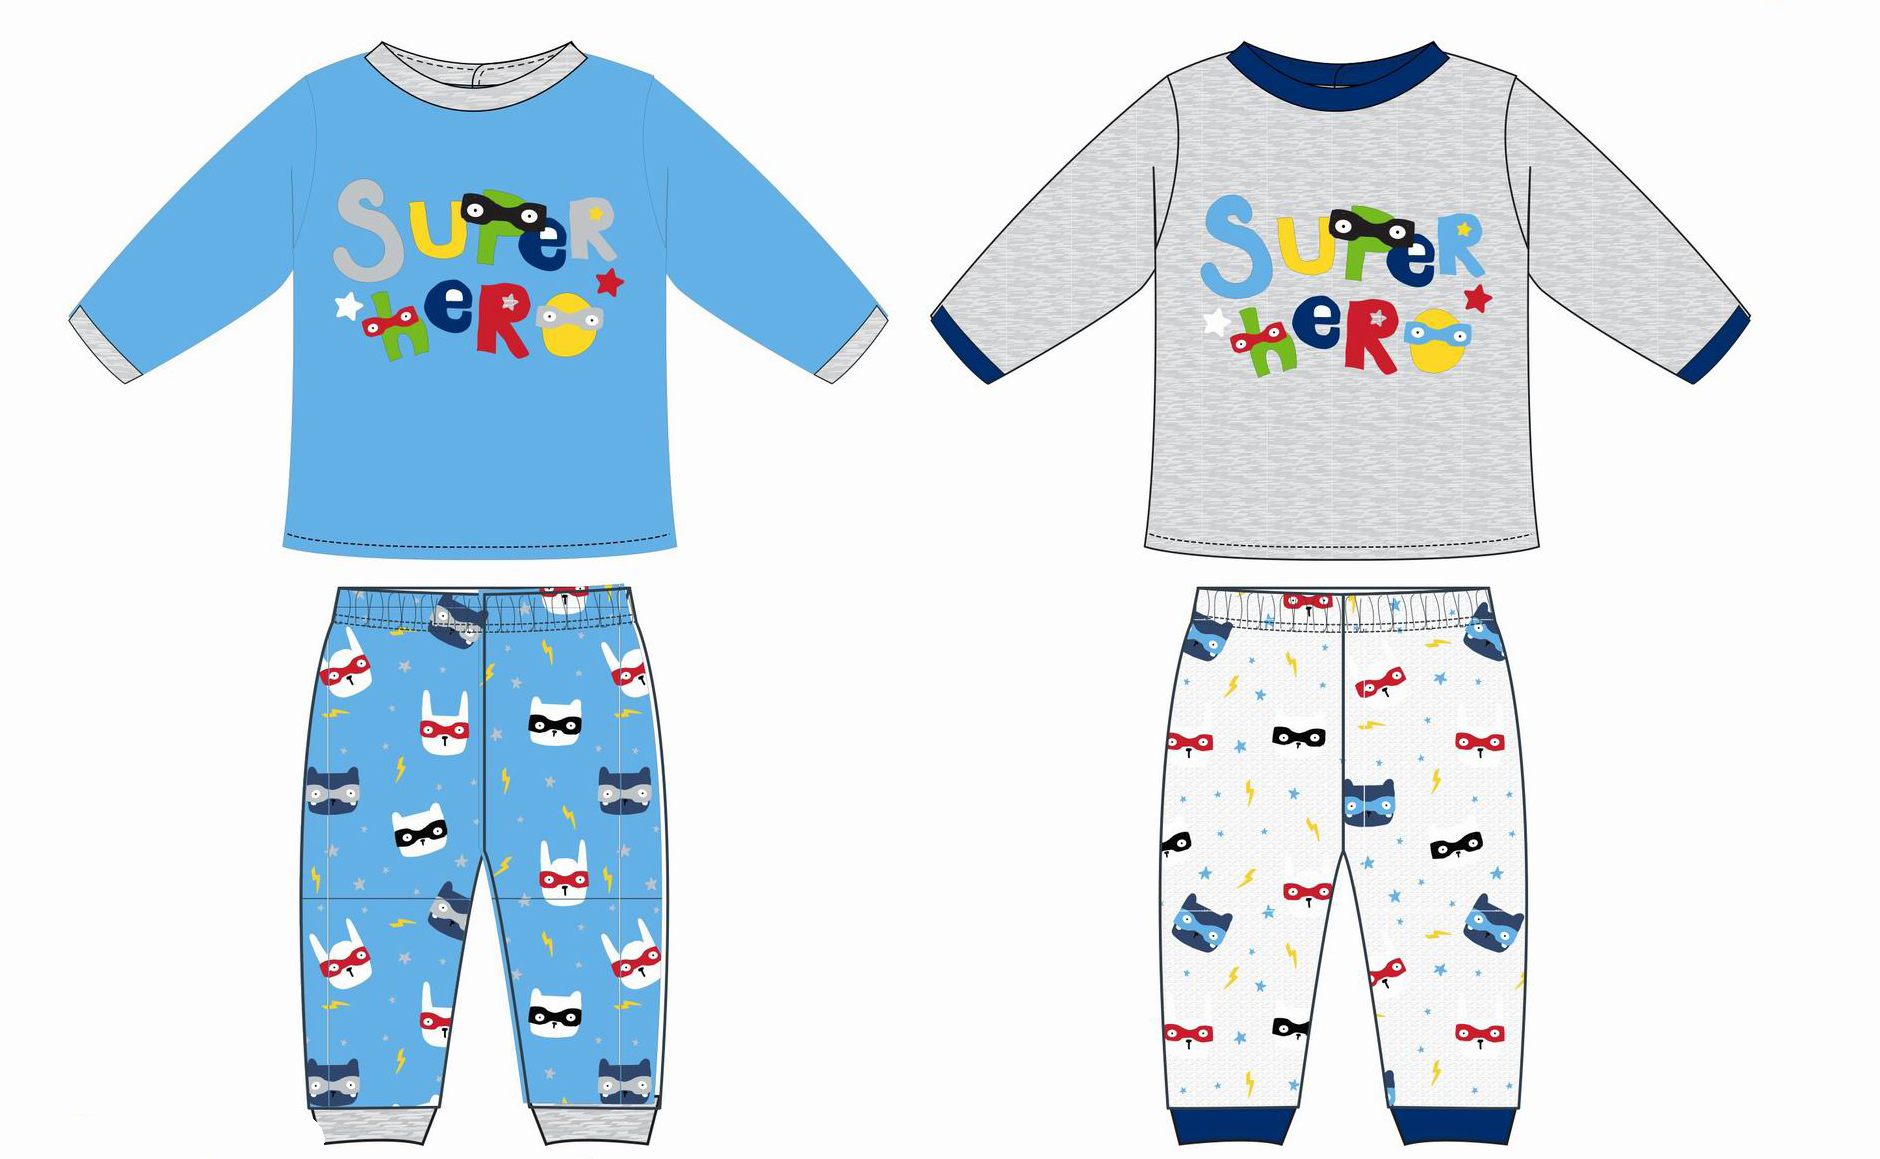 Boy's 2 PC. Rib Pajama Sets w/ Long-Sleeve SHIRT & Pull-On Pants - Superhero Print - Sizes 2T-4T